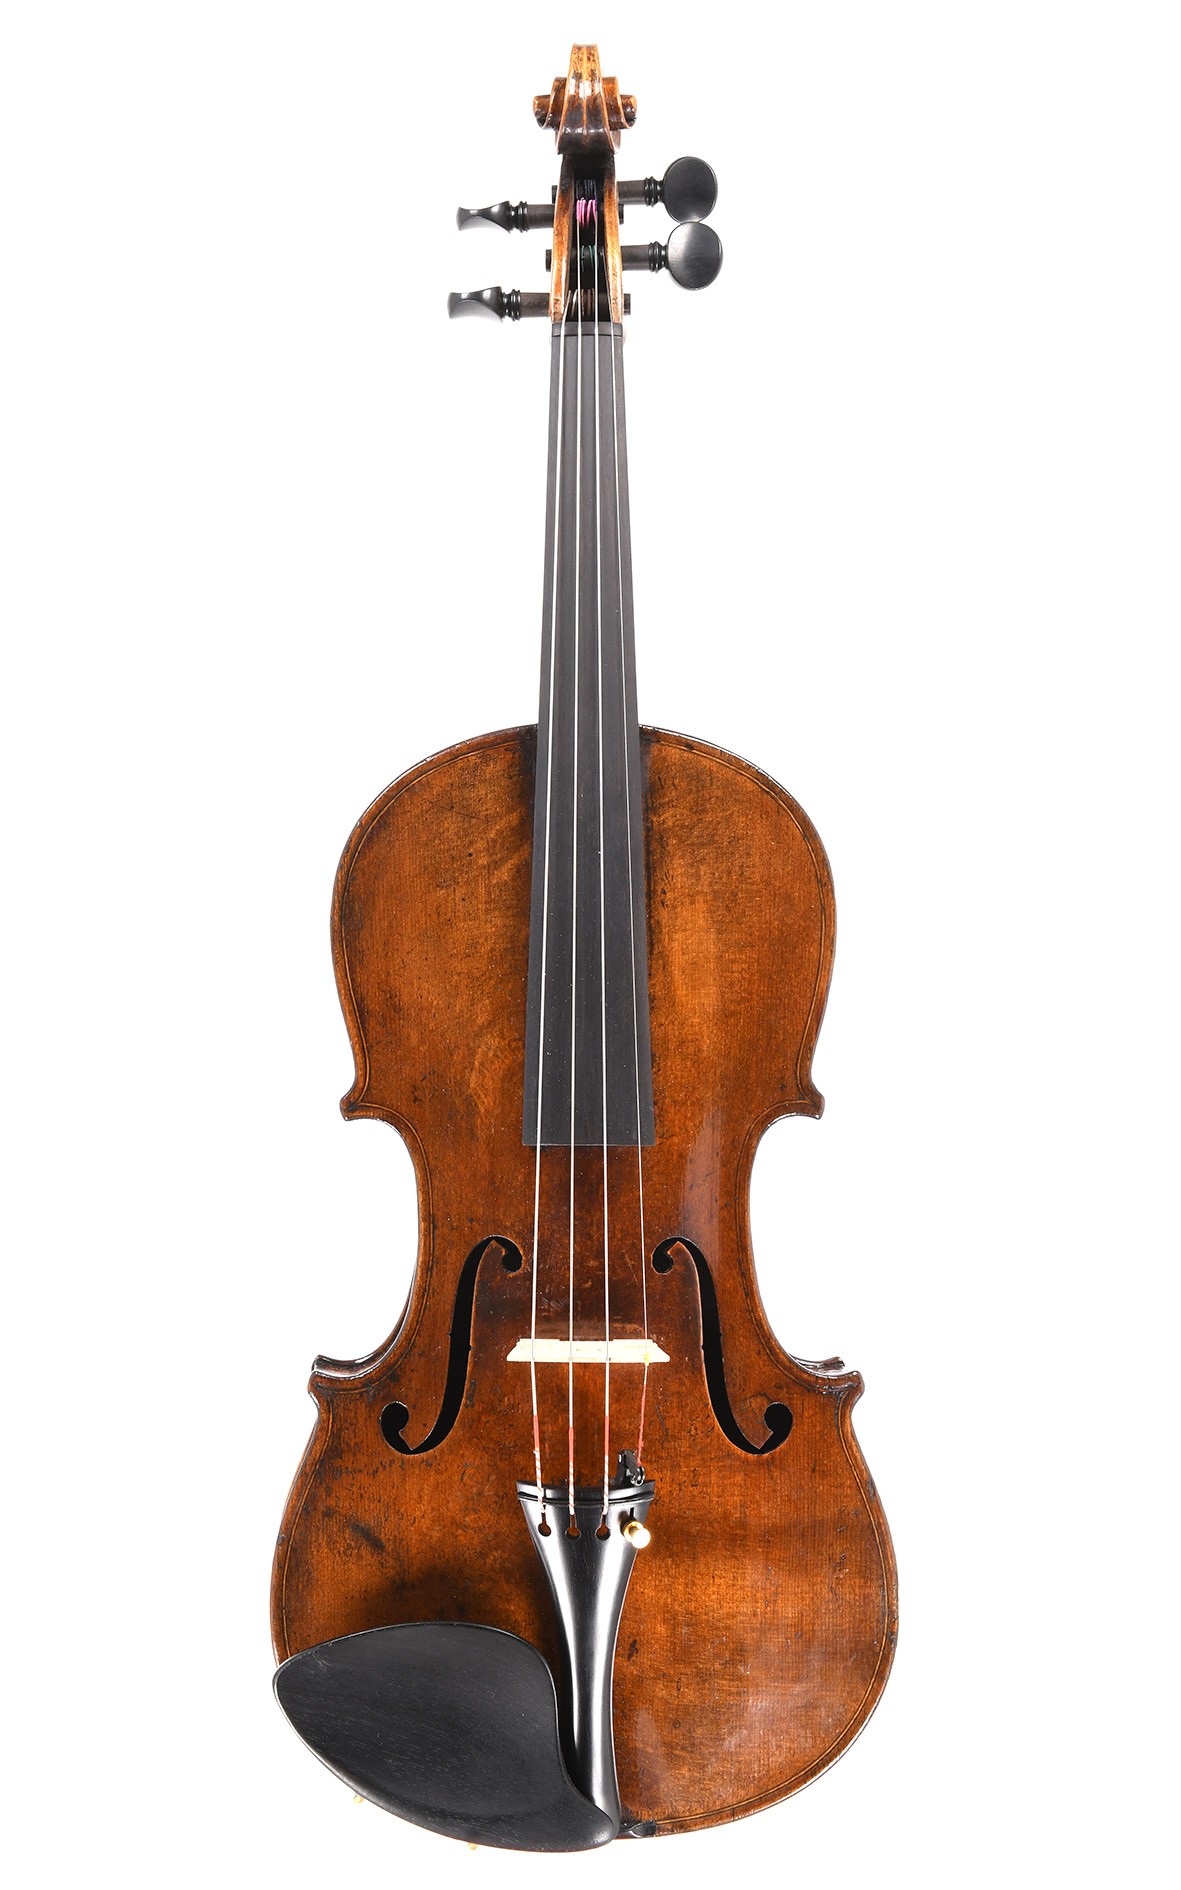 Antique violin from Saxony circa 1880